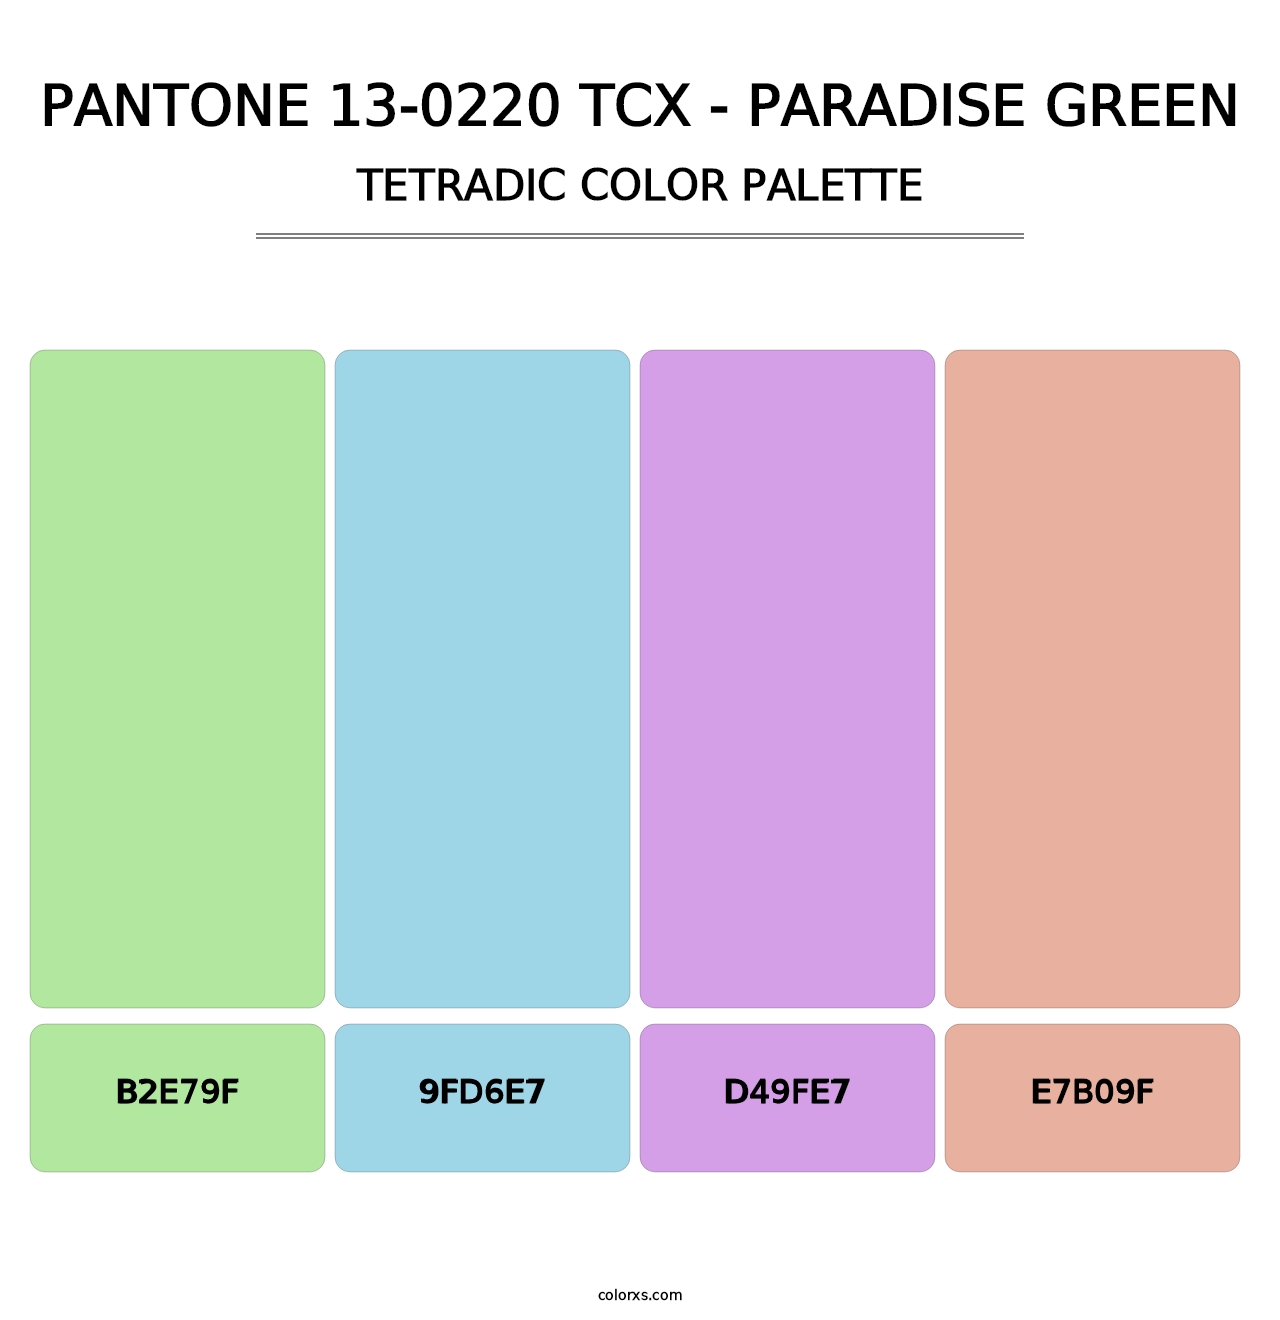 PANTONE 13-0220 TCX - Paradise Green - Tetradic Color Palette